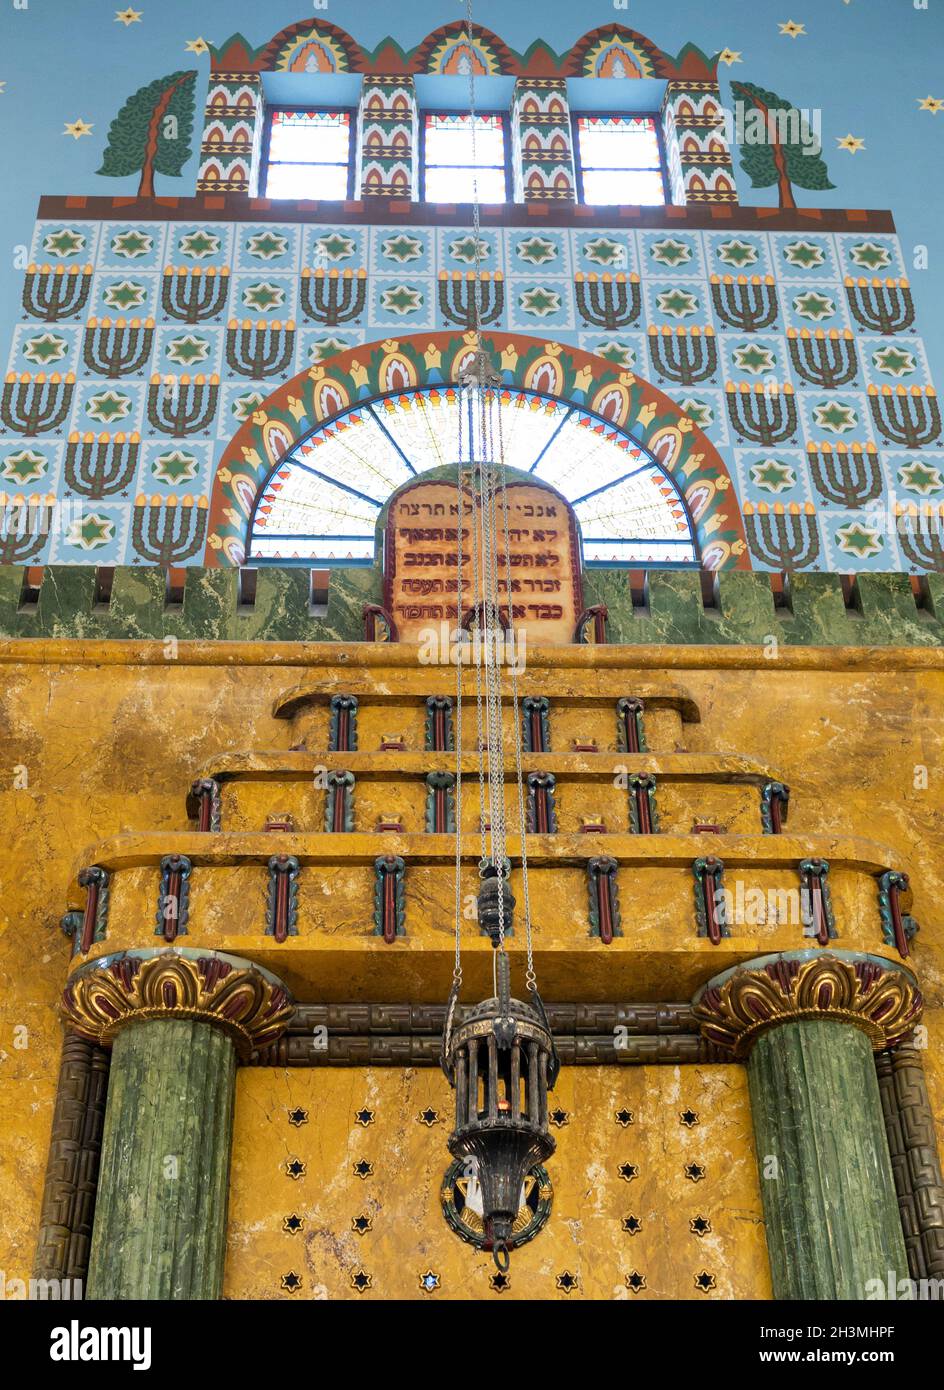 Luz eterna en la sinagoga ortodoxa de la calle Kazinczy: La luz eterna sobre la Torah y la pared oriental de la sinagoga ortodoxa de la calle Kazinczy. Foto de stock